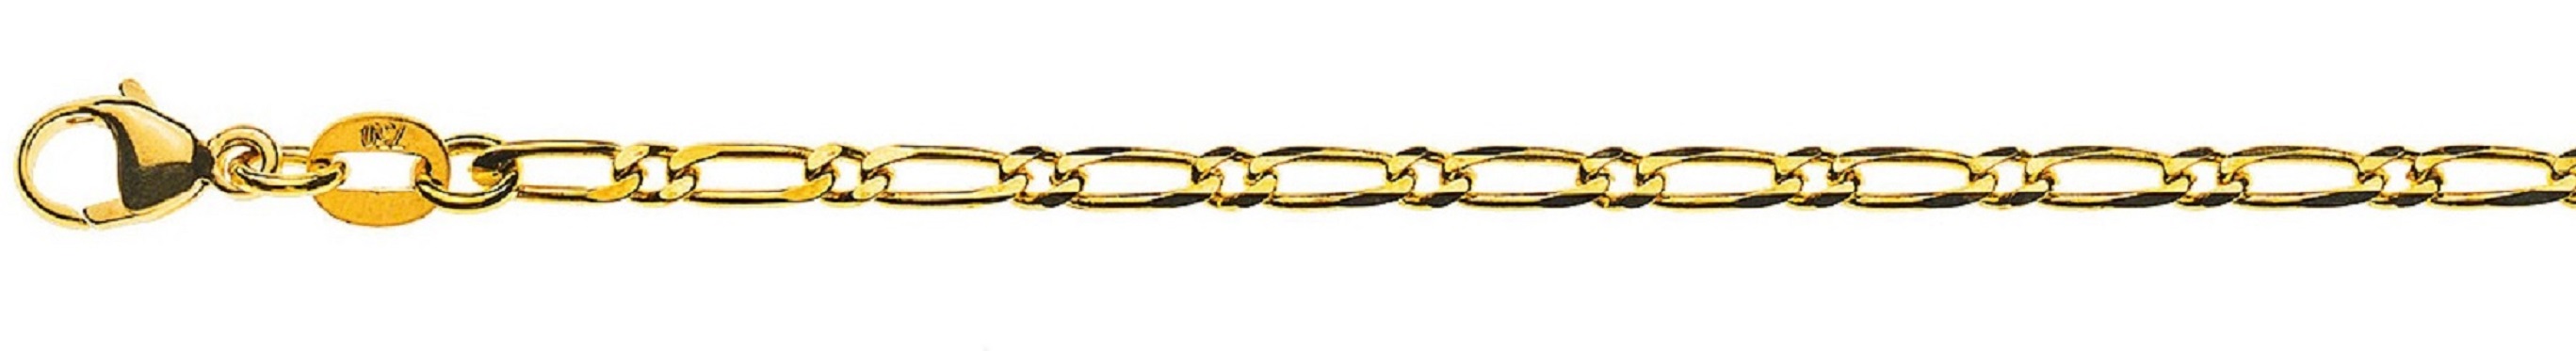 AURONOS Prestige Halskette Gelbgold 18K Figarokette 42cm 2.3mm